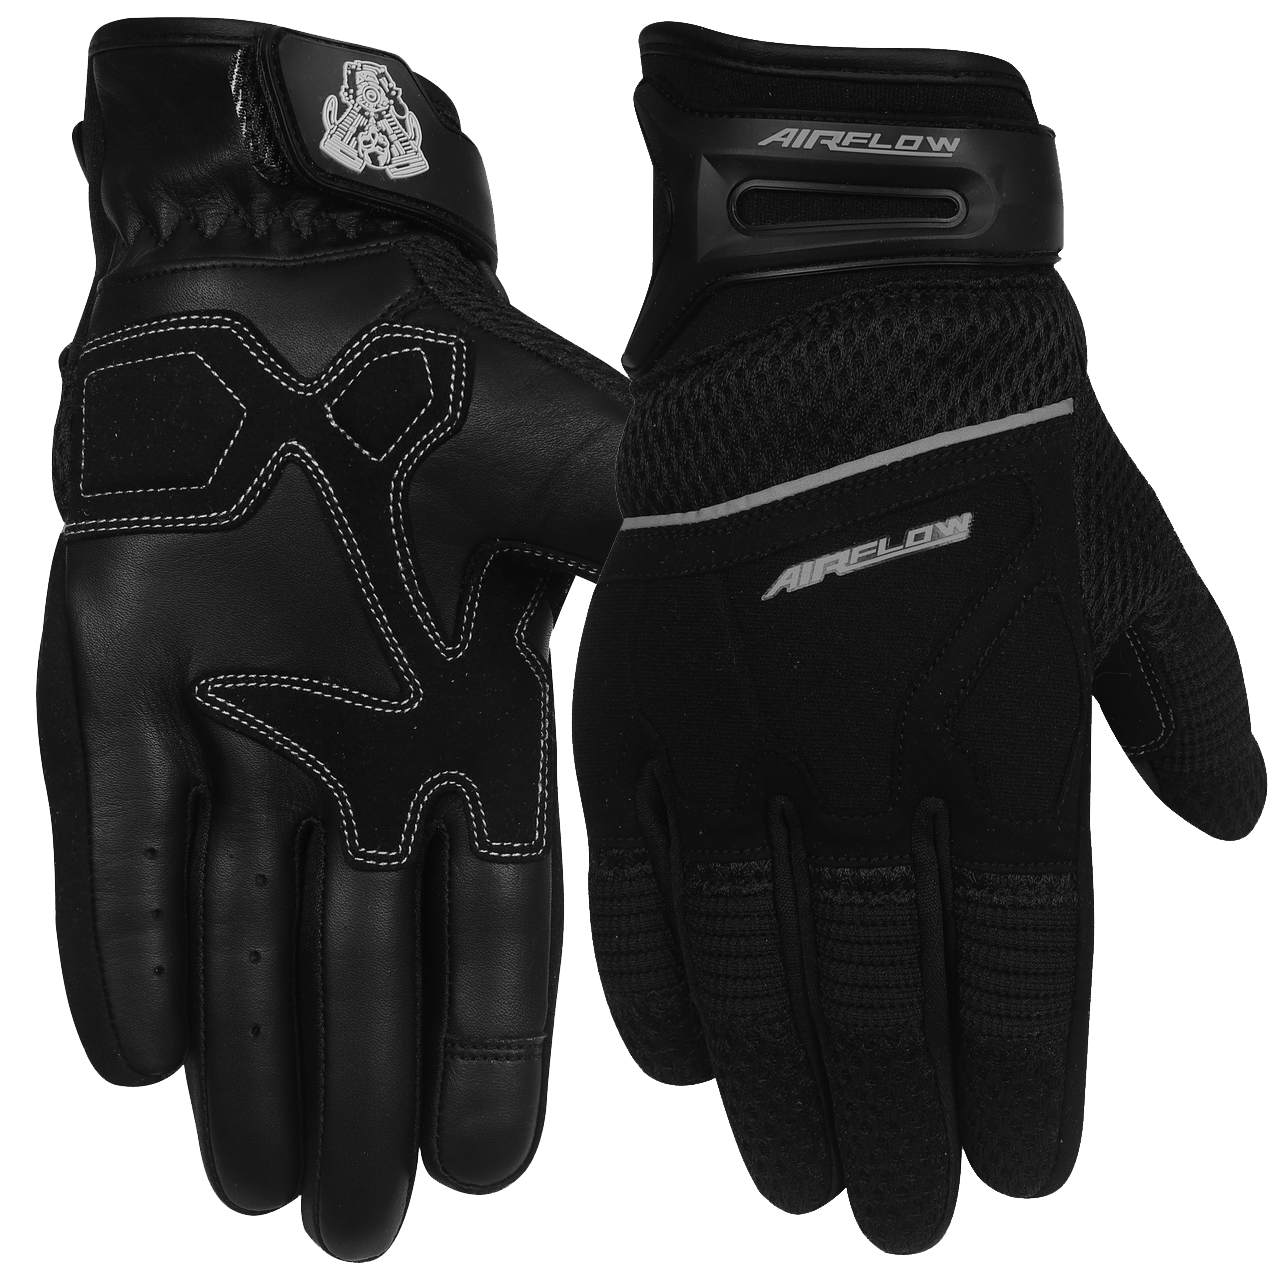 Vance Leather Airflow II Mesh/Textile Motorcycle Gloves, Black